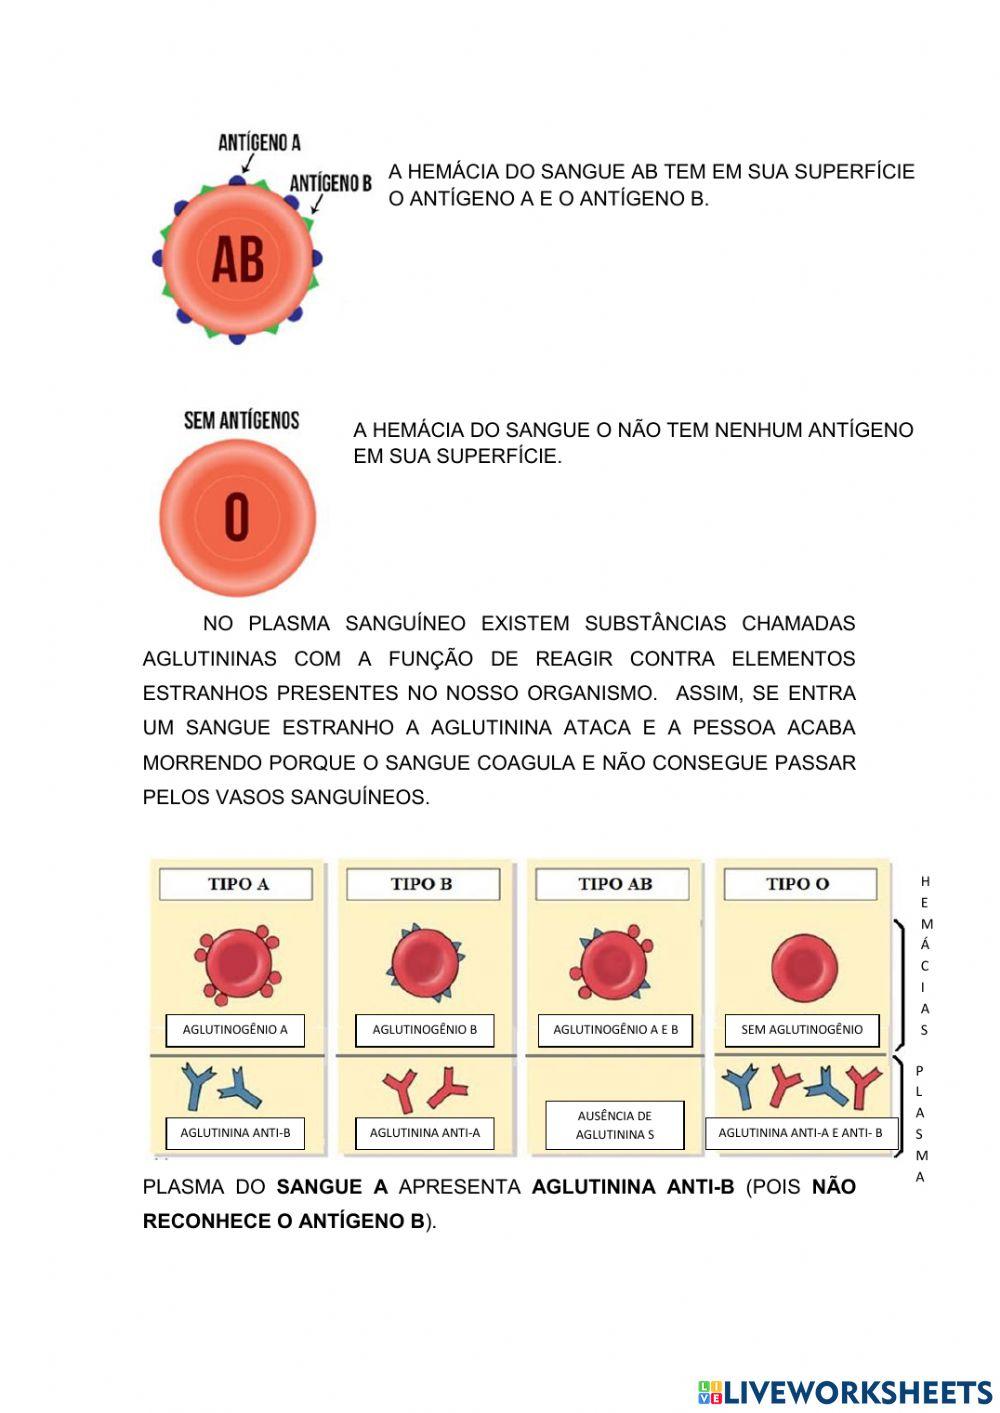 Tipos sanguíneos - Sistema ABO